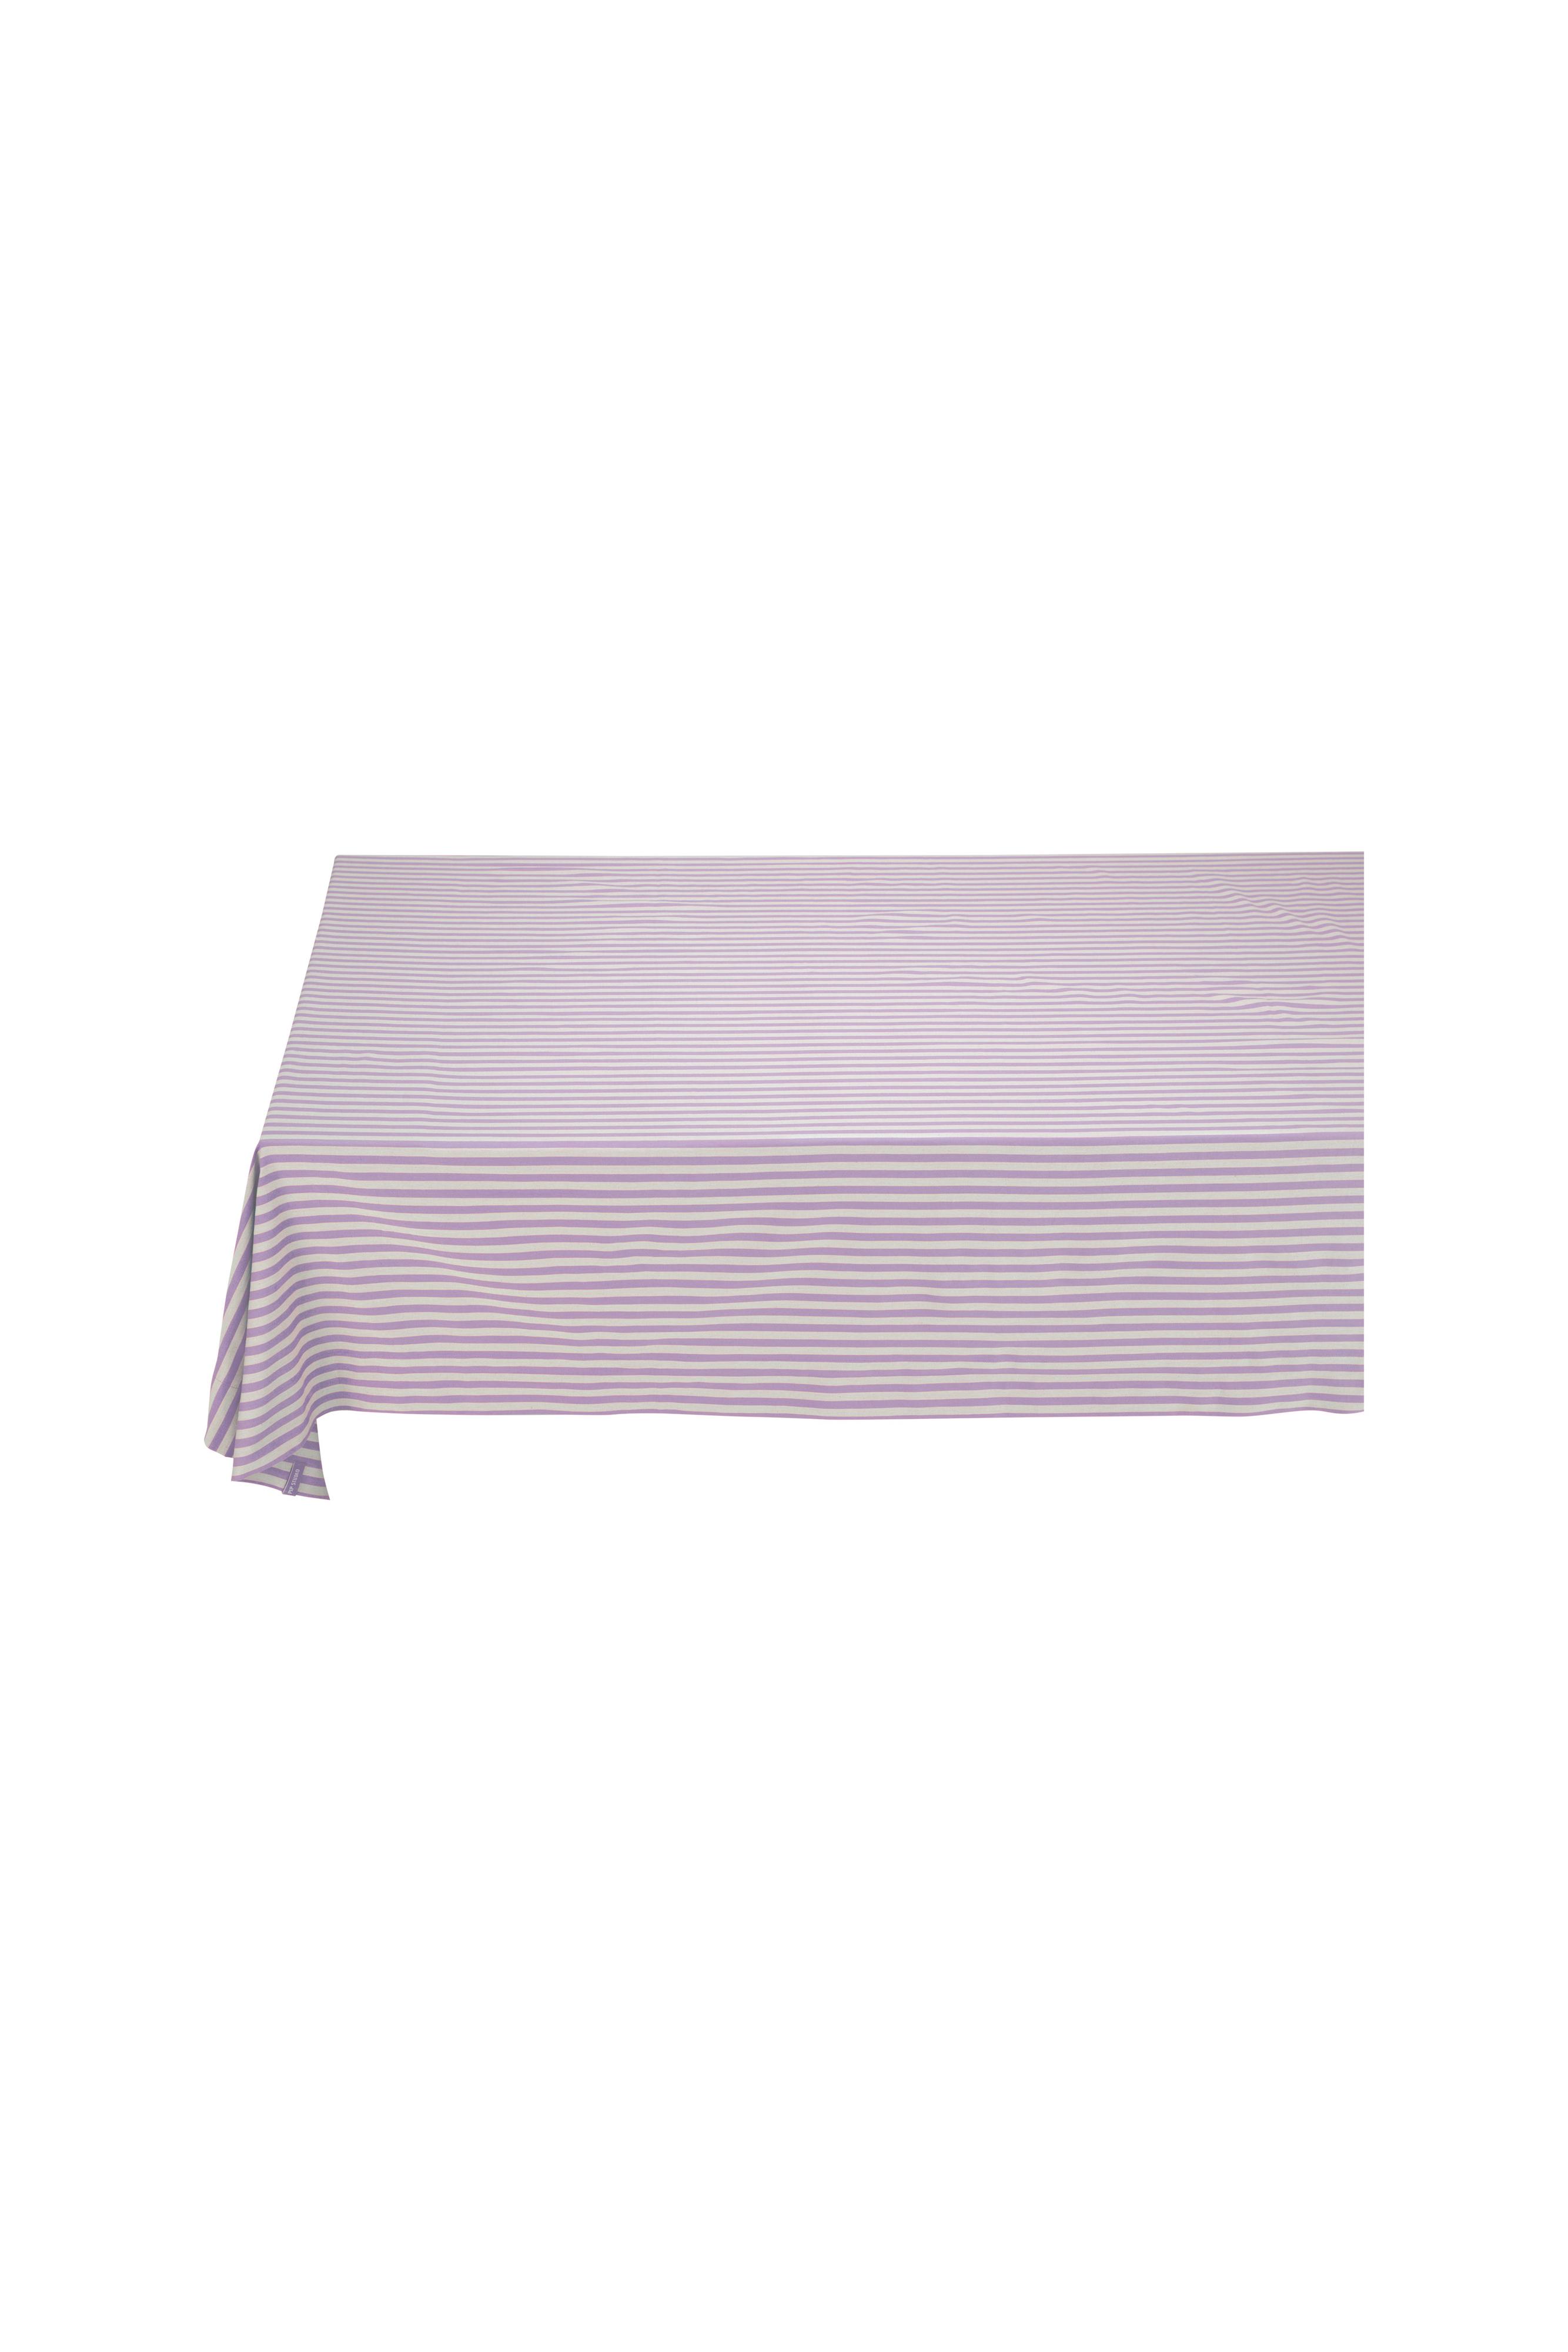 Table Cloth Stripes Lilac 160x250cm Gift